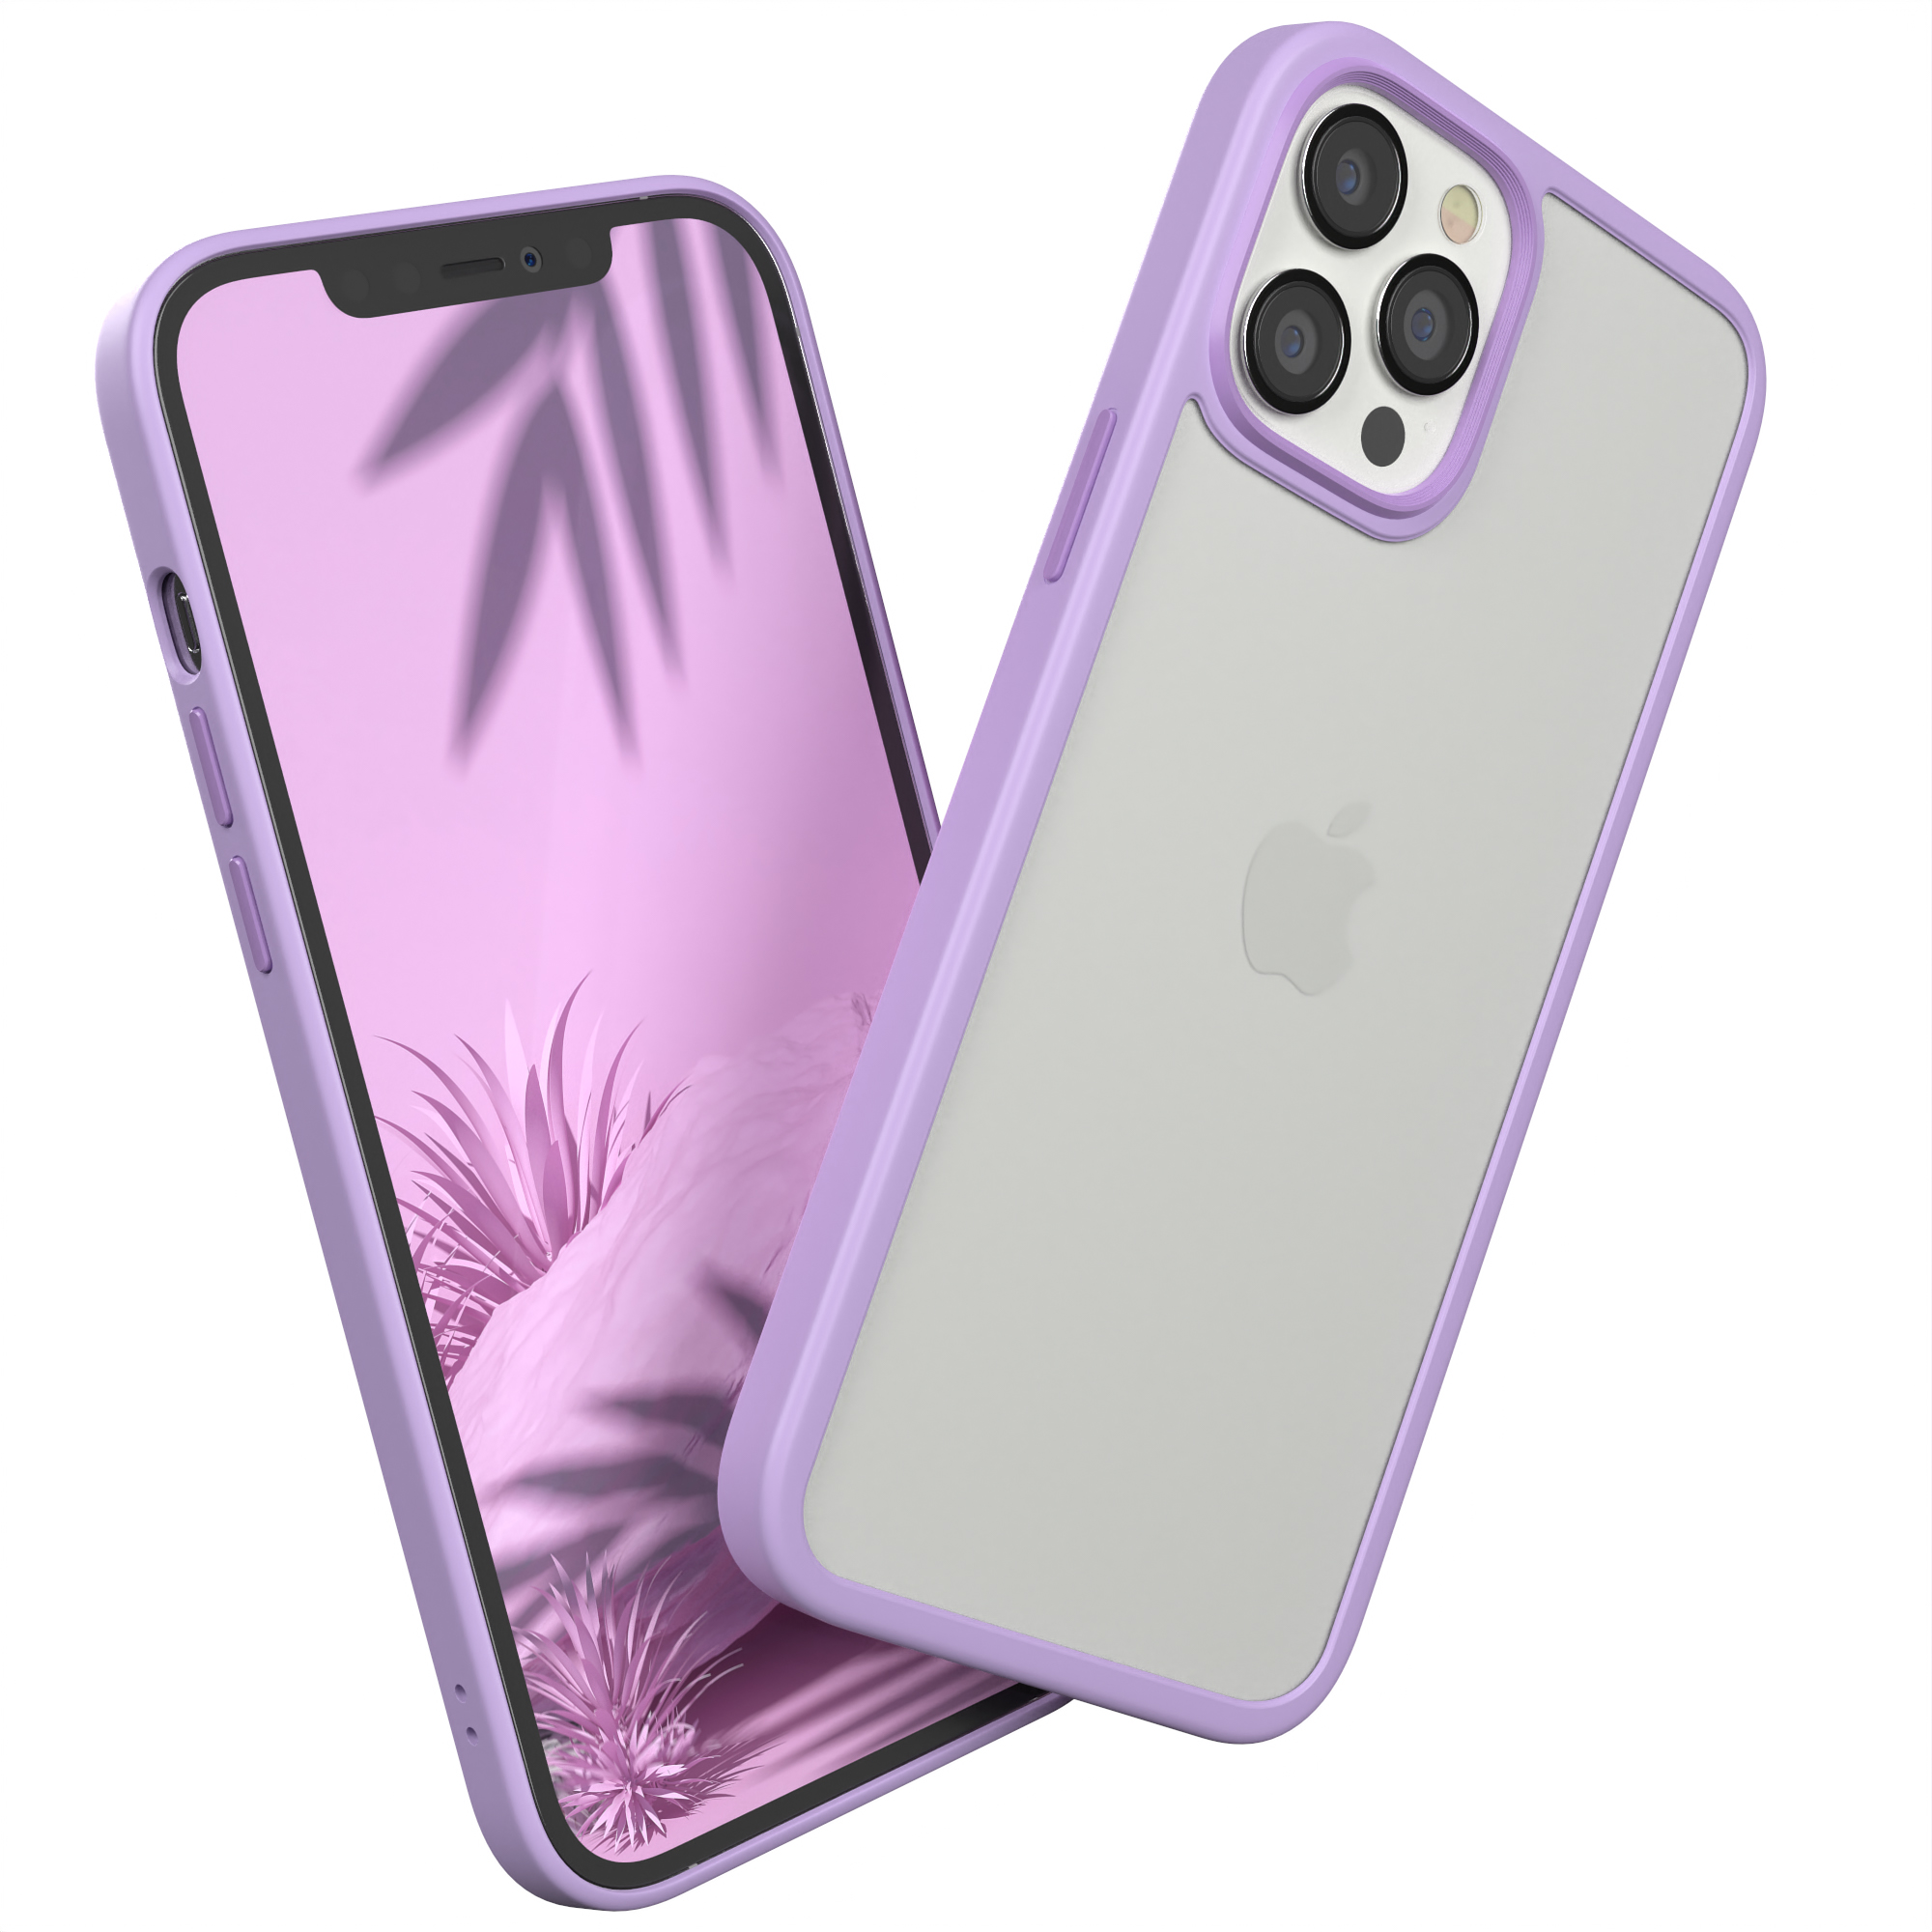 CASE Pro EAZY iPhone Apple, Matt, 12 Outdoor Lila Backcover, Lavendel Case Max,